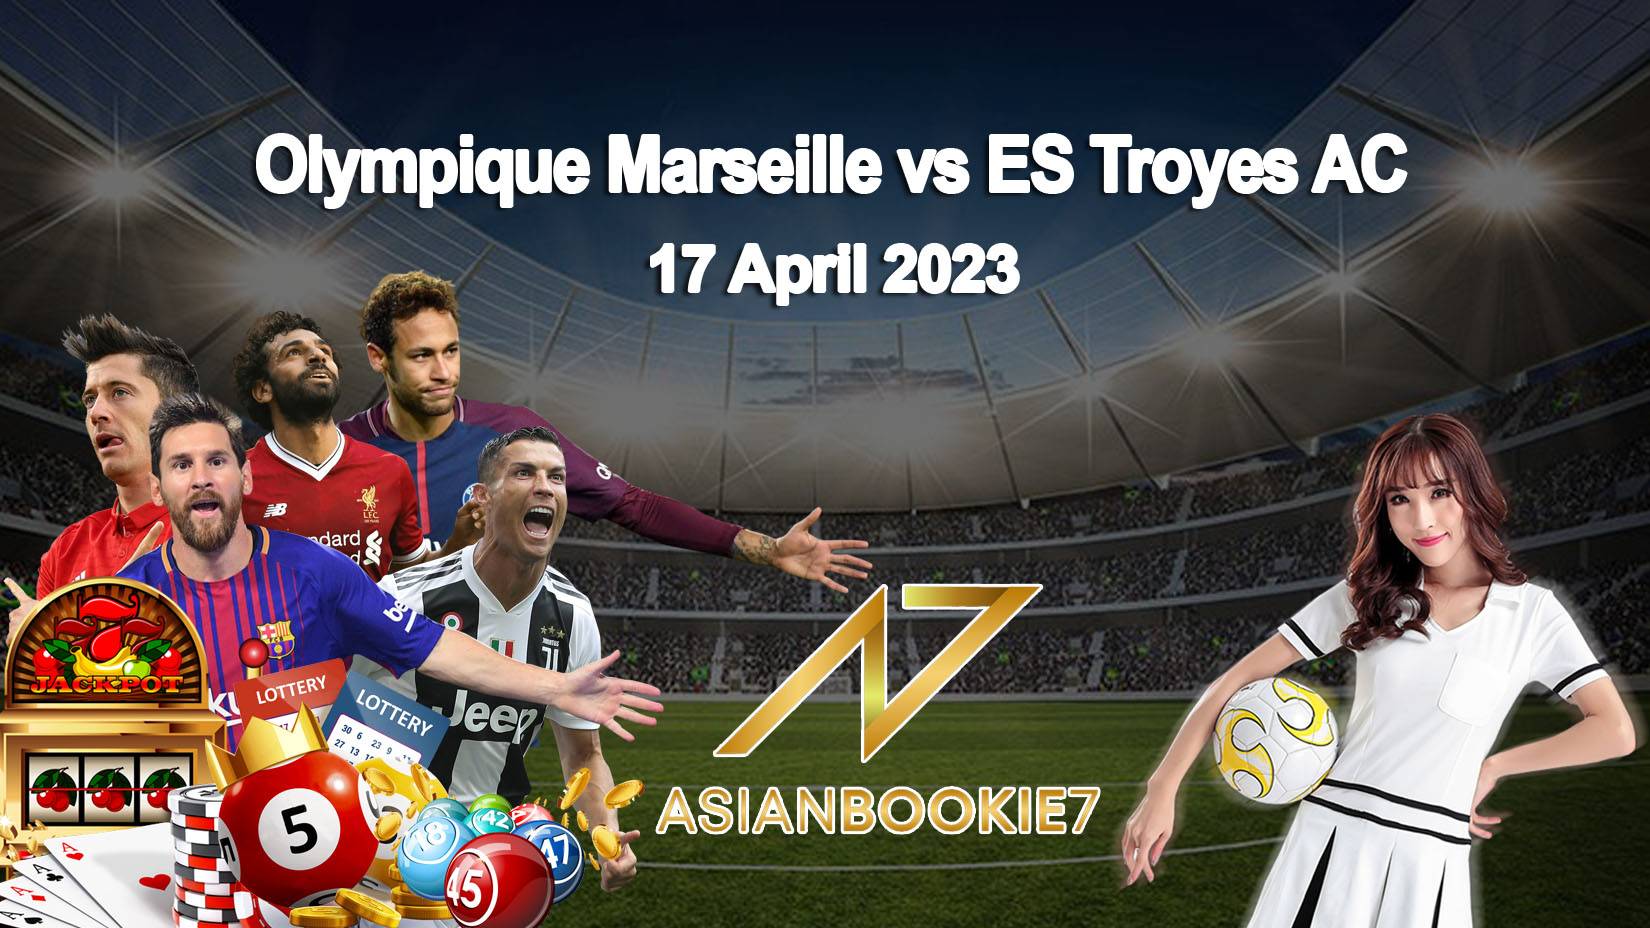 Prediksi Olympique Marseille vs ES Troyes AC 17 April 2023